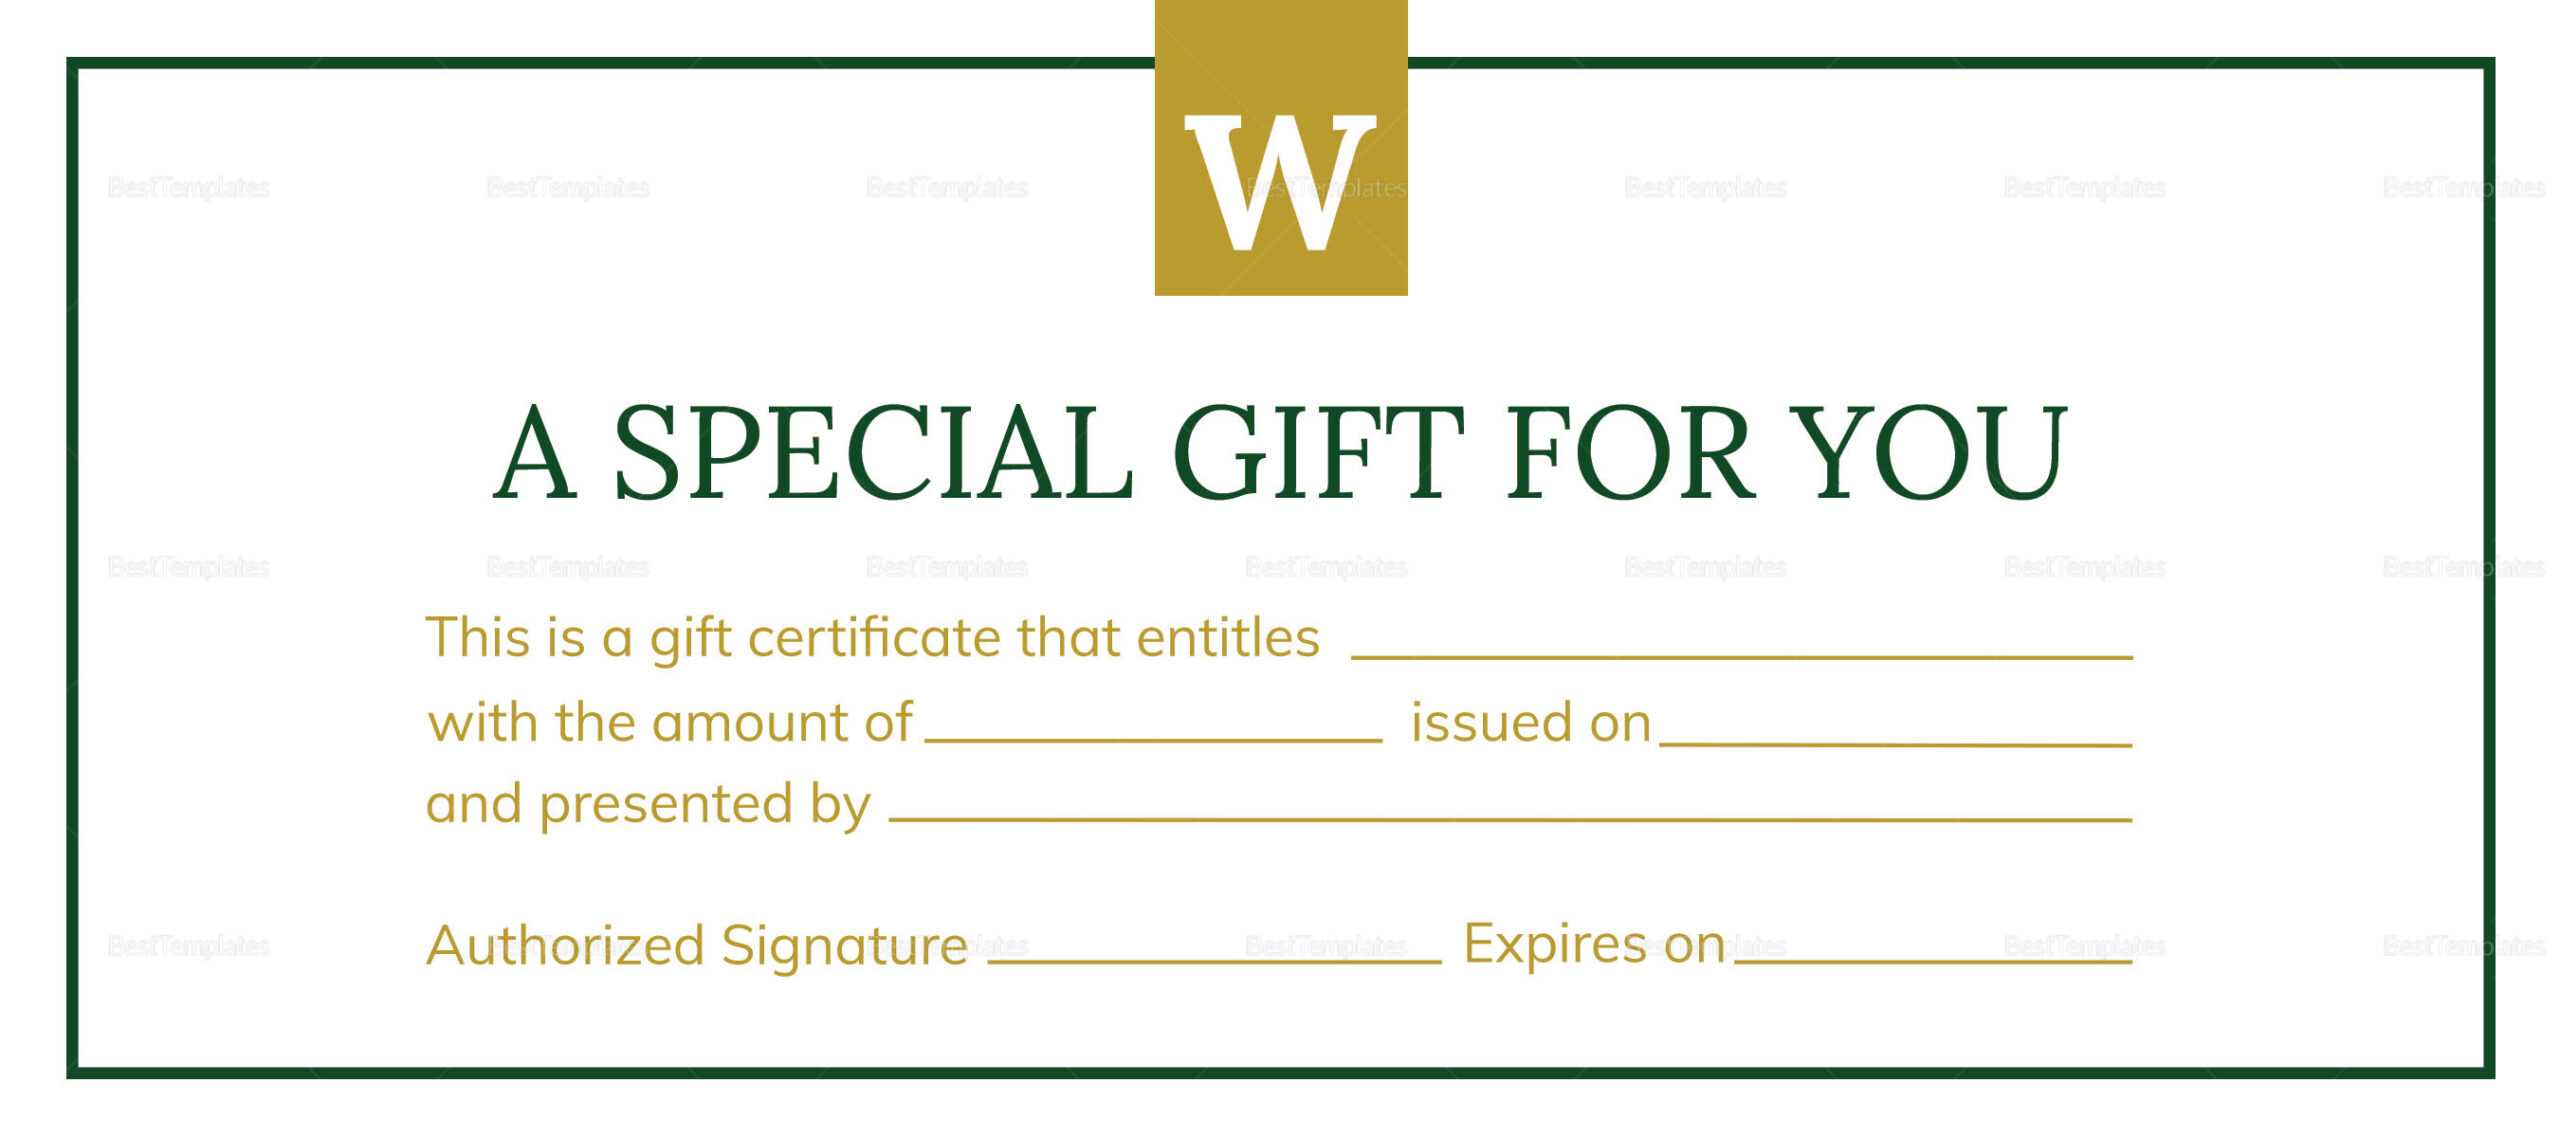 Hotel Gift Certificate Template Regarding Gift Certificate Template Publisher